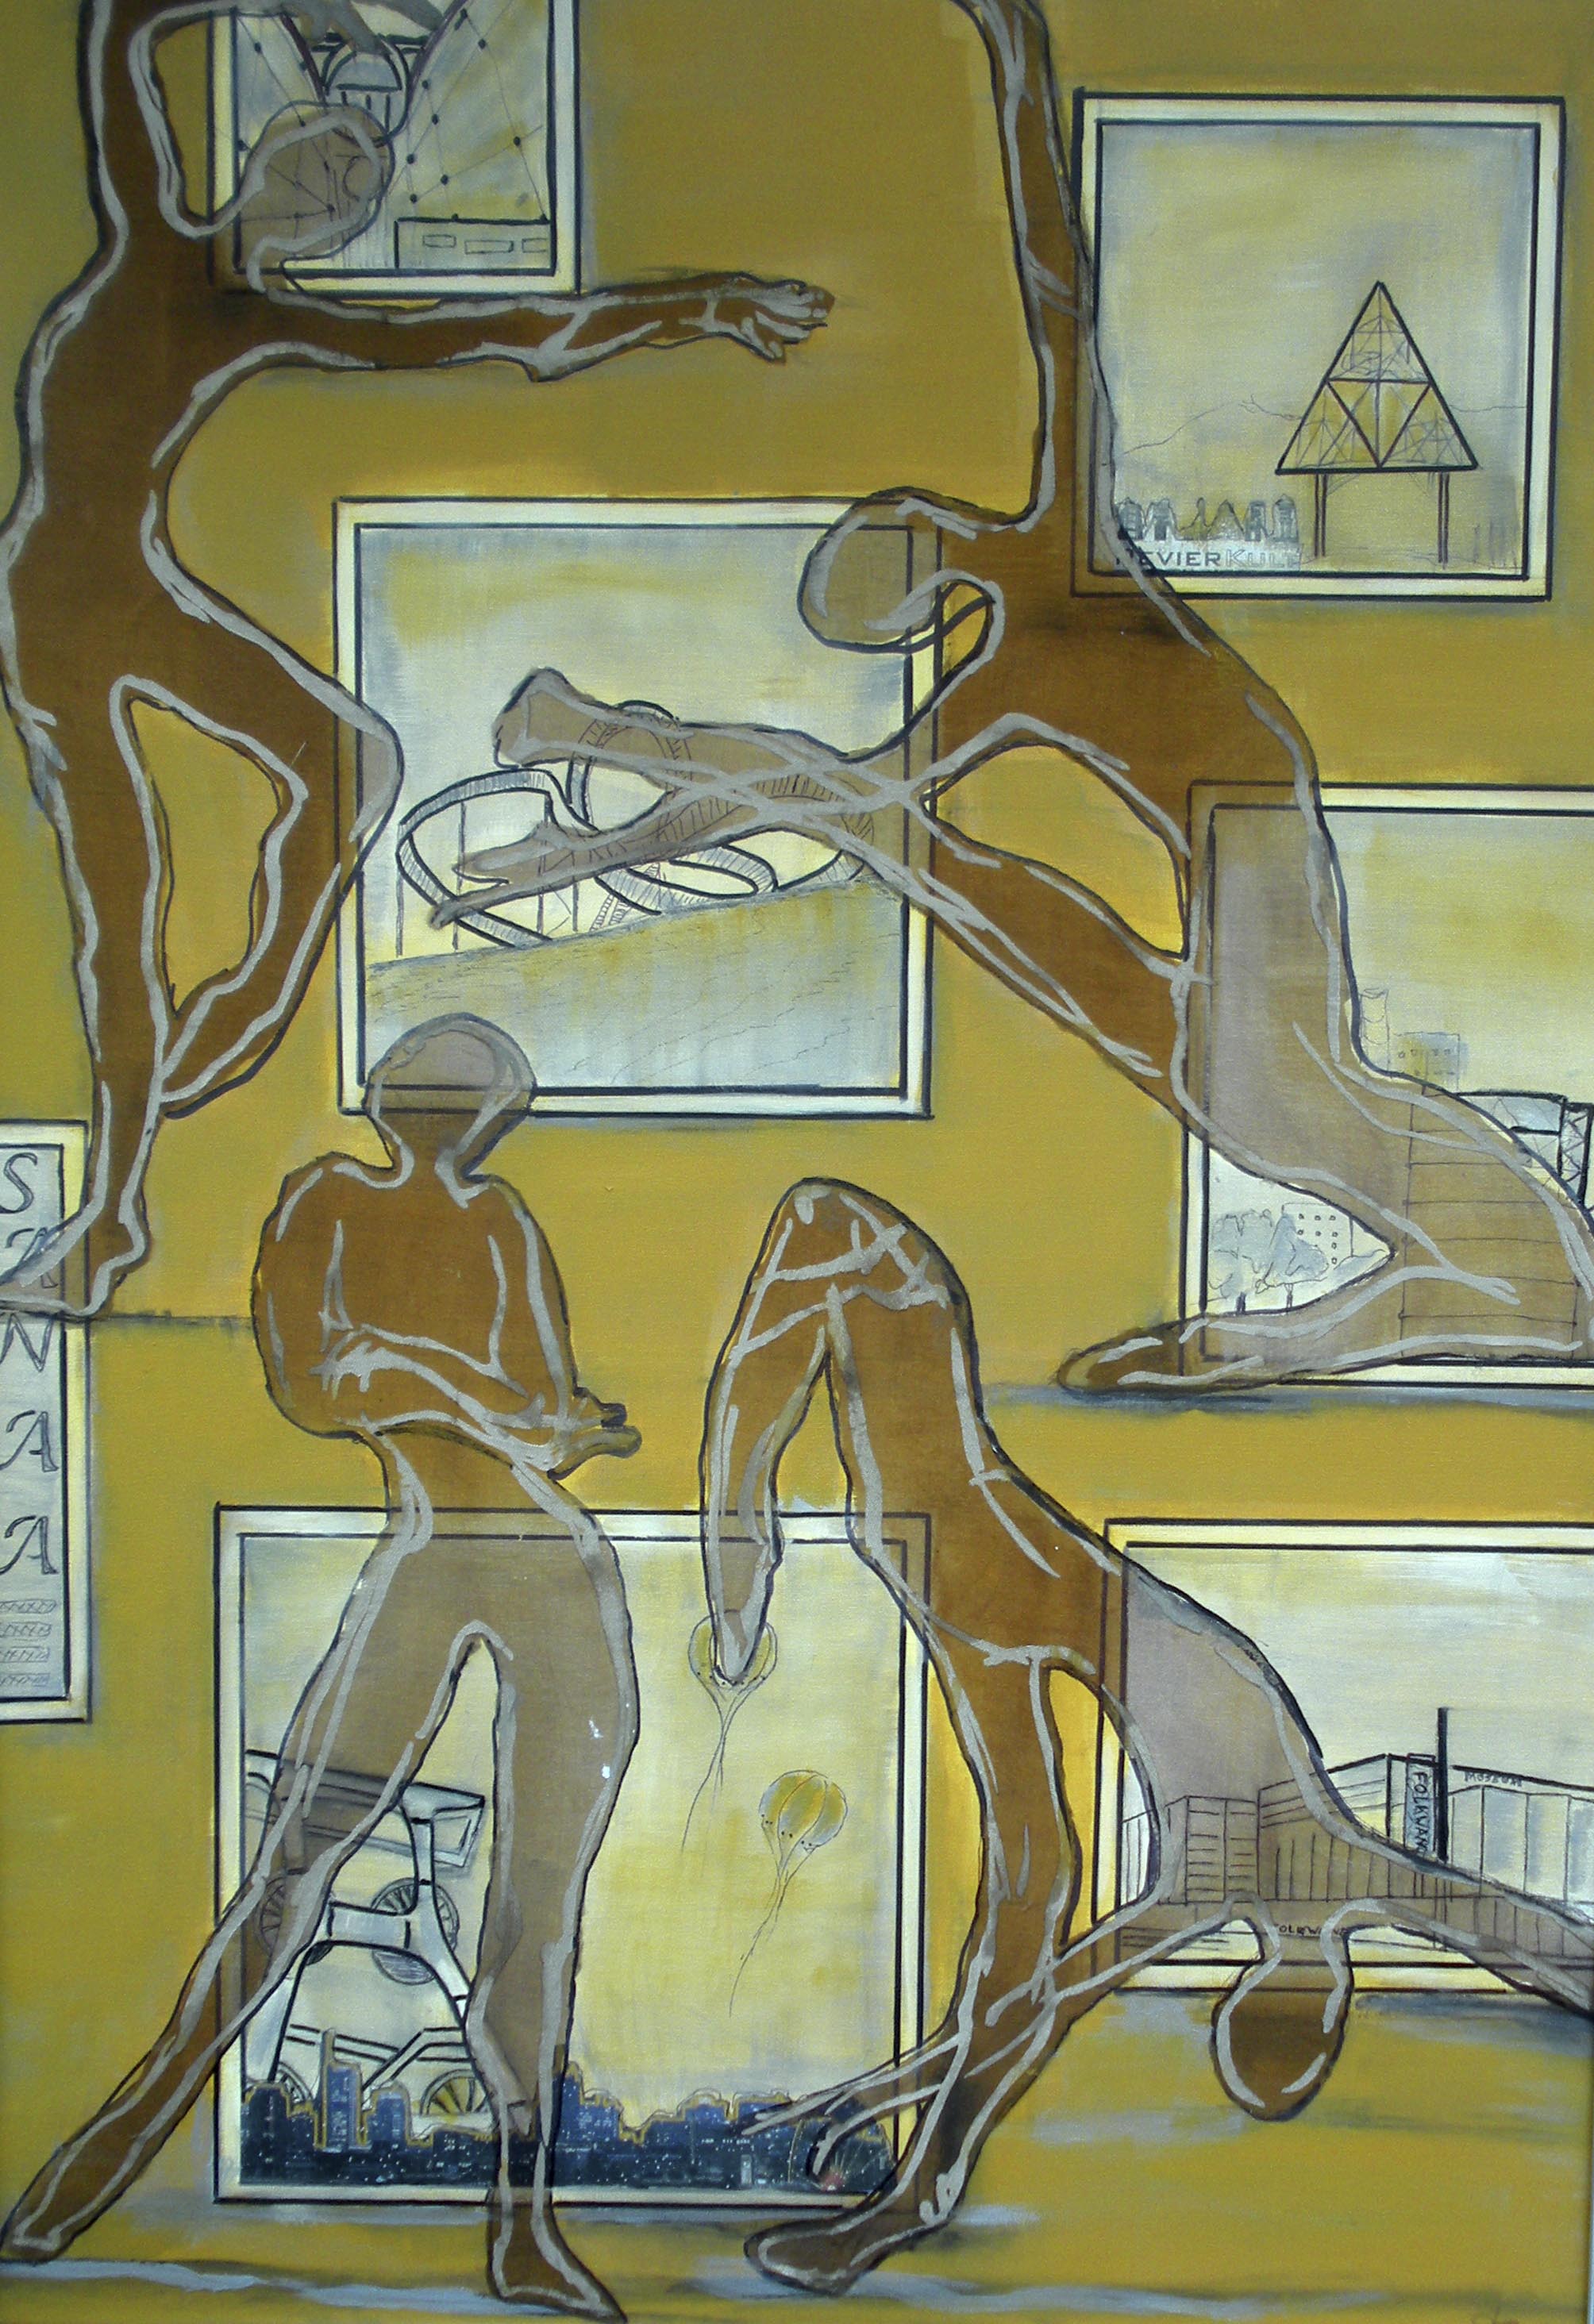 Der Pott Tanzt 2, Textile Collage, 70 x 100 cm.